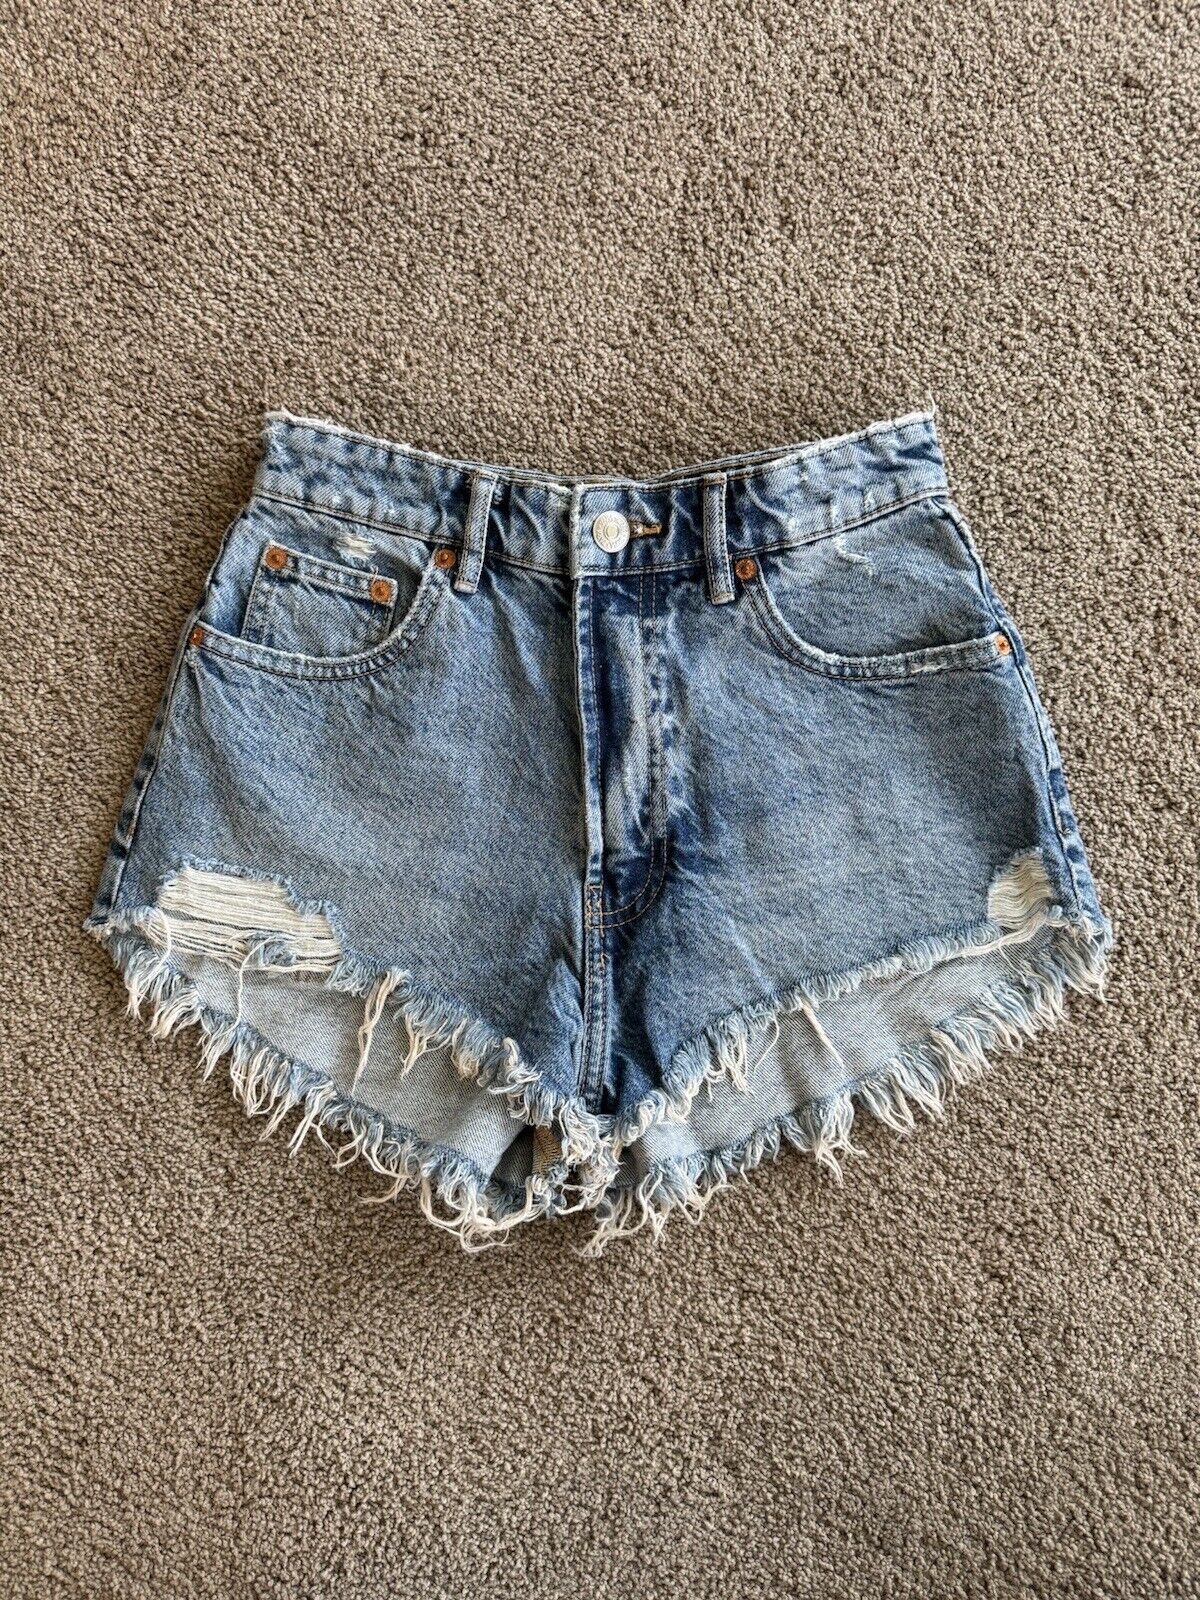 bundle of womens jean shorts size 4 - image 14